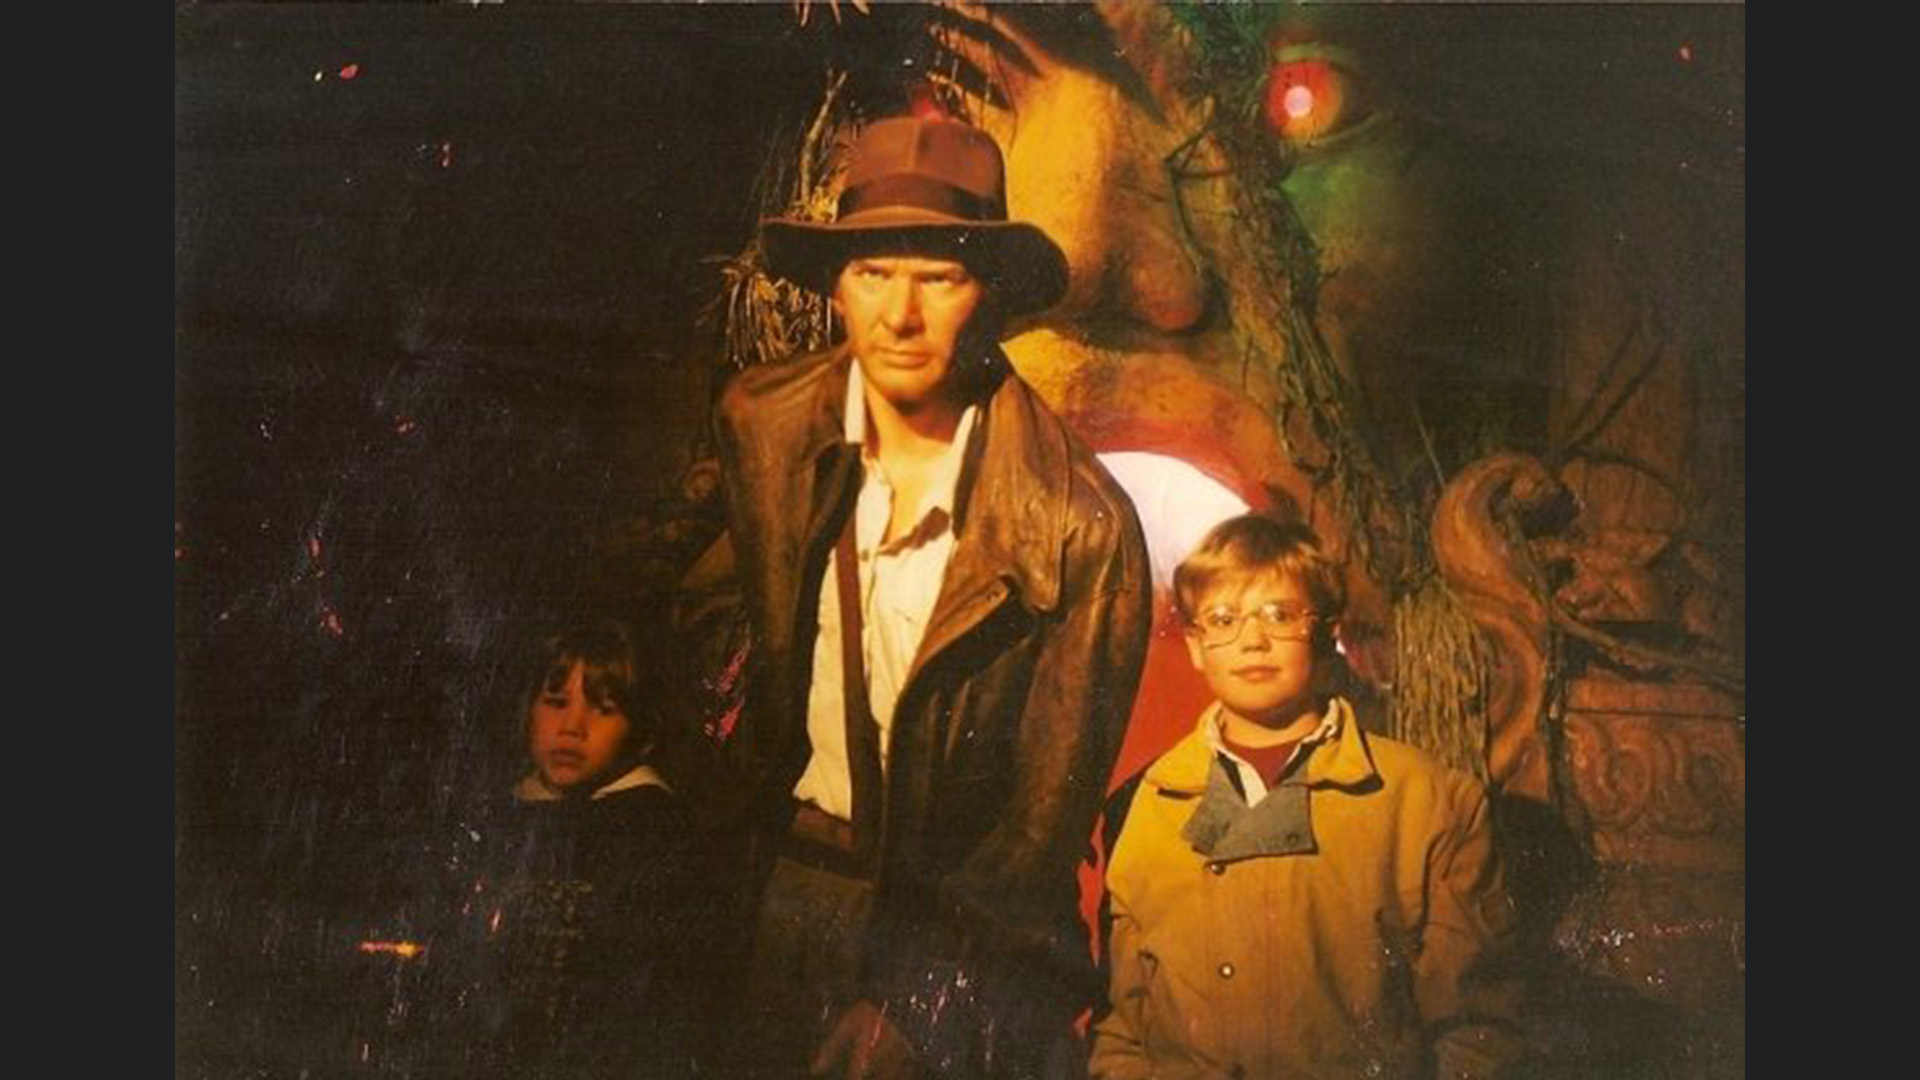 Ian Bucknole visiting Indiana Jones at Madame Tussaud's as a child.